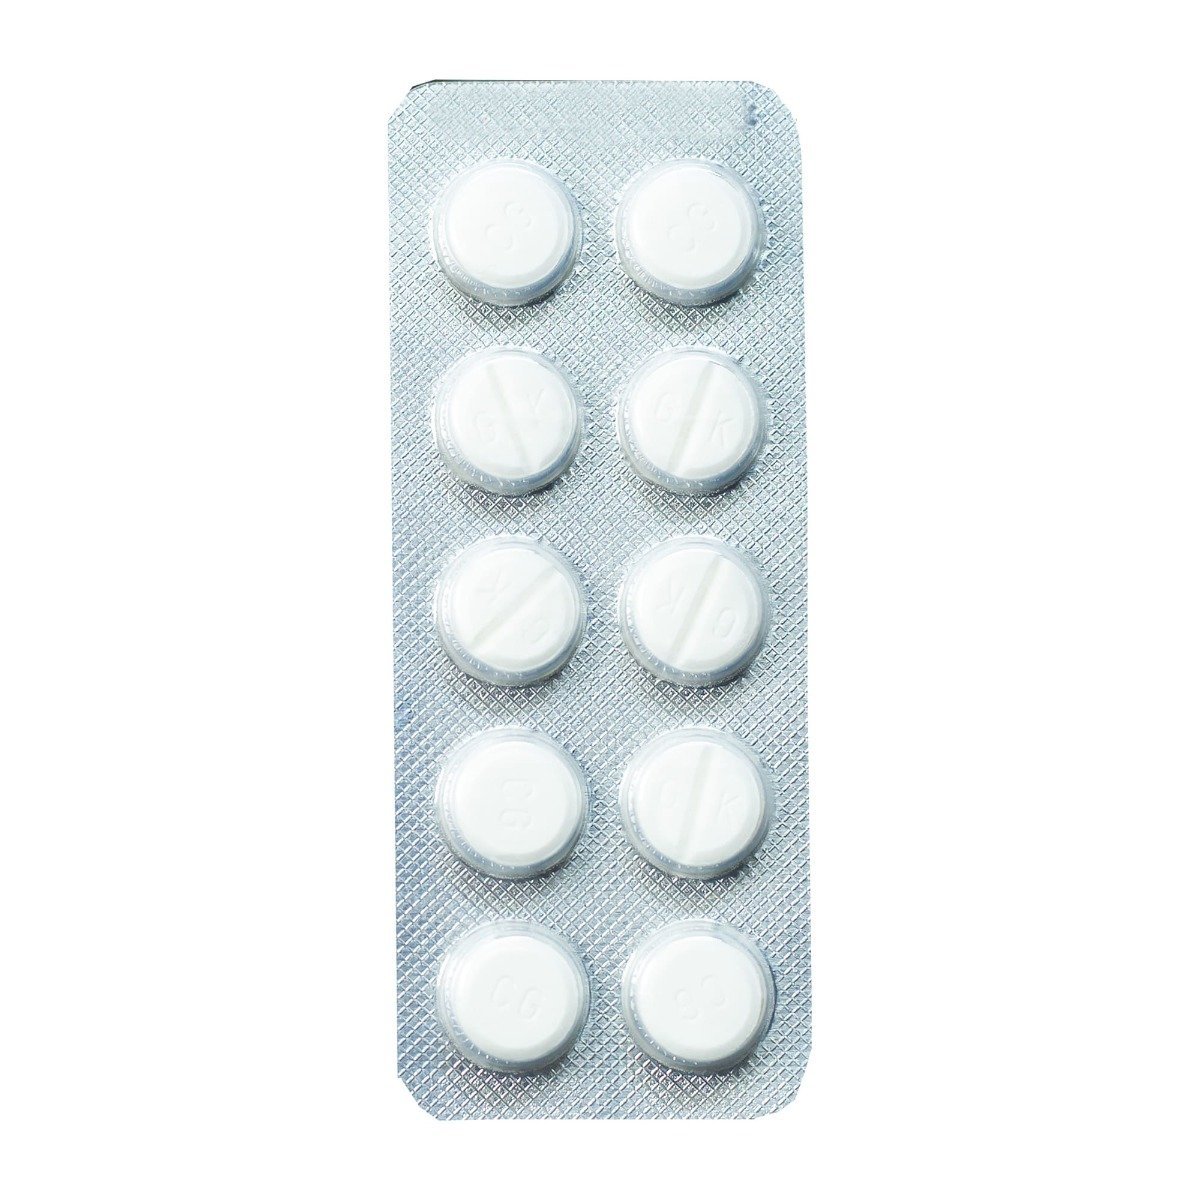 Tegretol 200 mg - 30 Tablets - Bloom Pharmacy